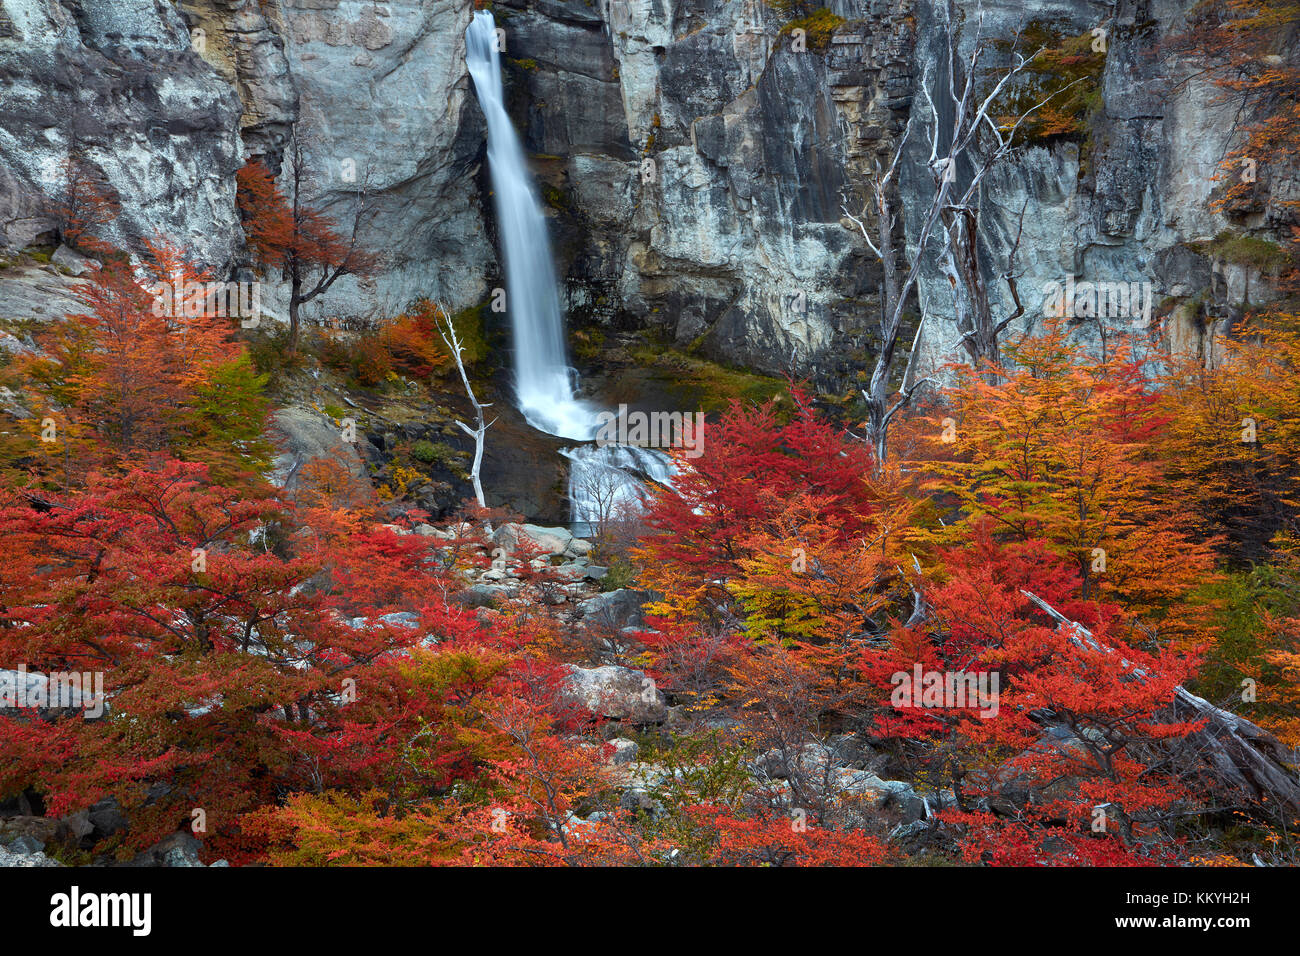 El Chorrillo Waterfall and lenga trees in autumn, near El Chalten, Parque Nacional Los Glaciares, Patagonia, Argentina, South America Stock Photo